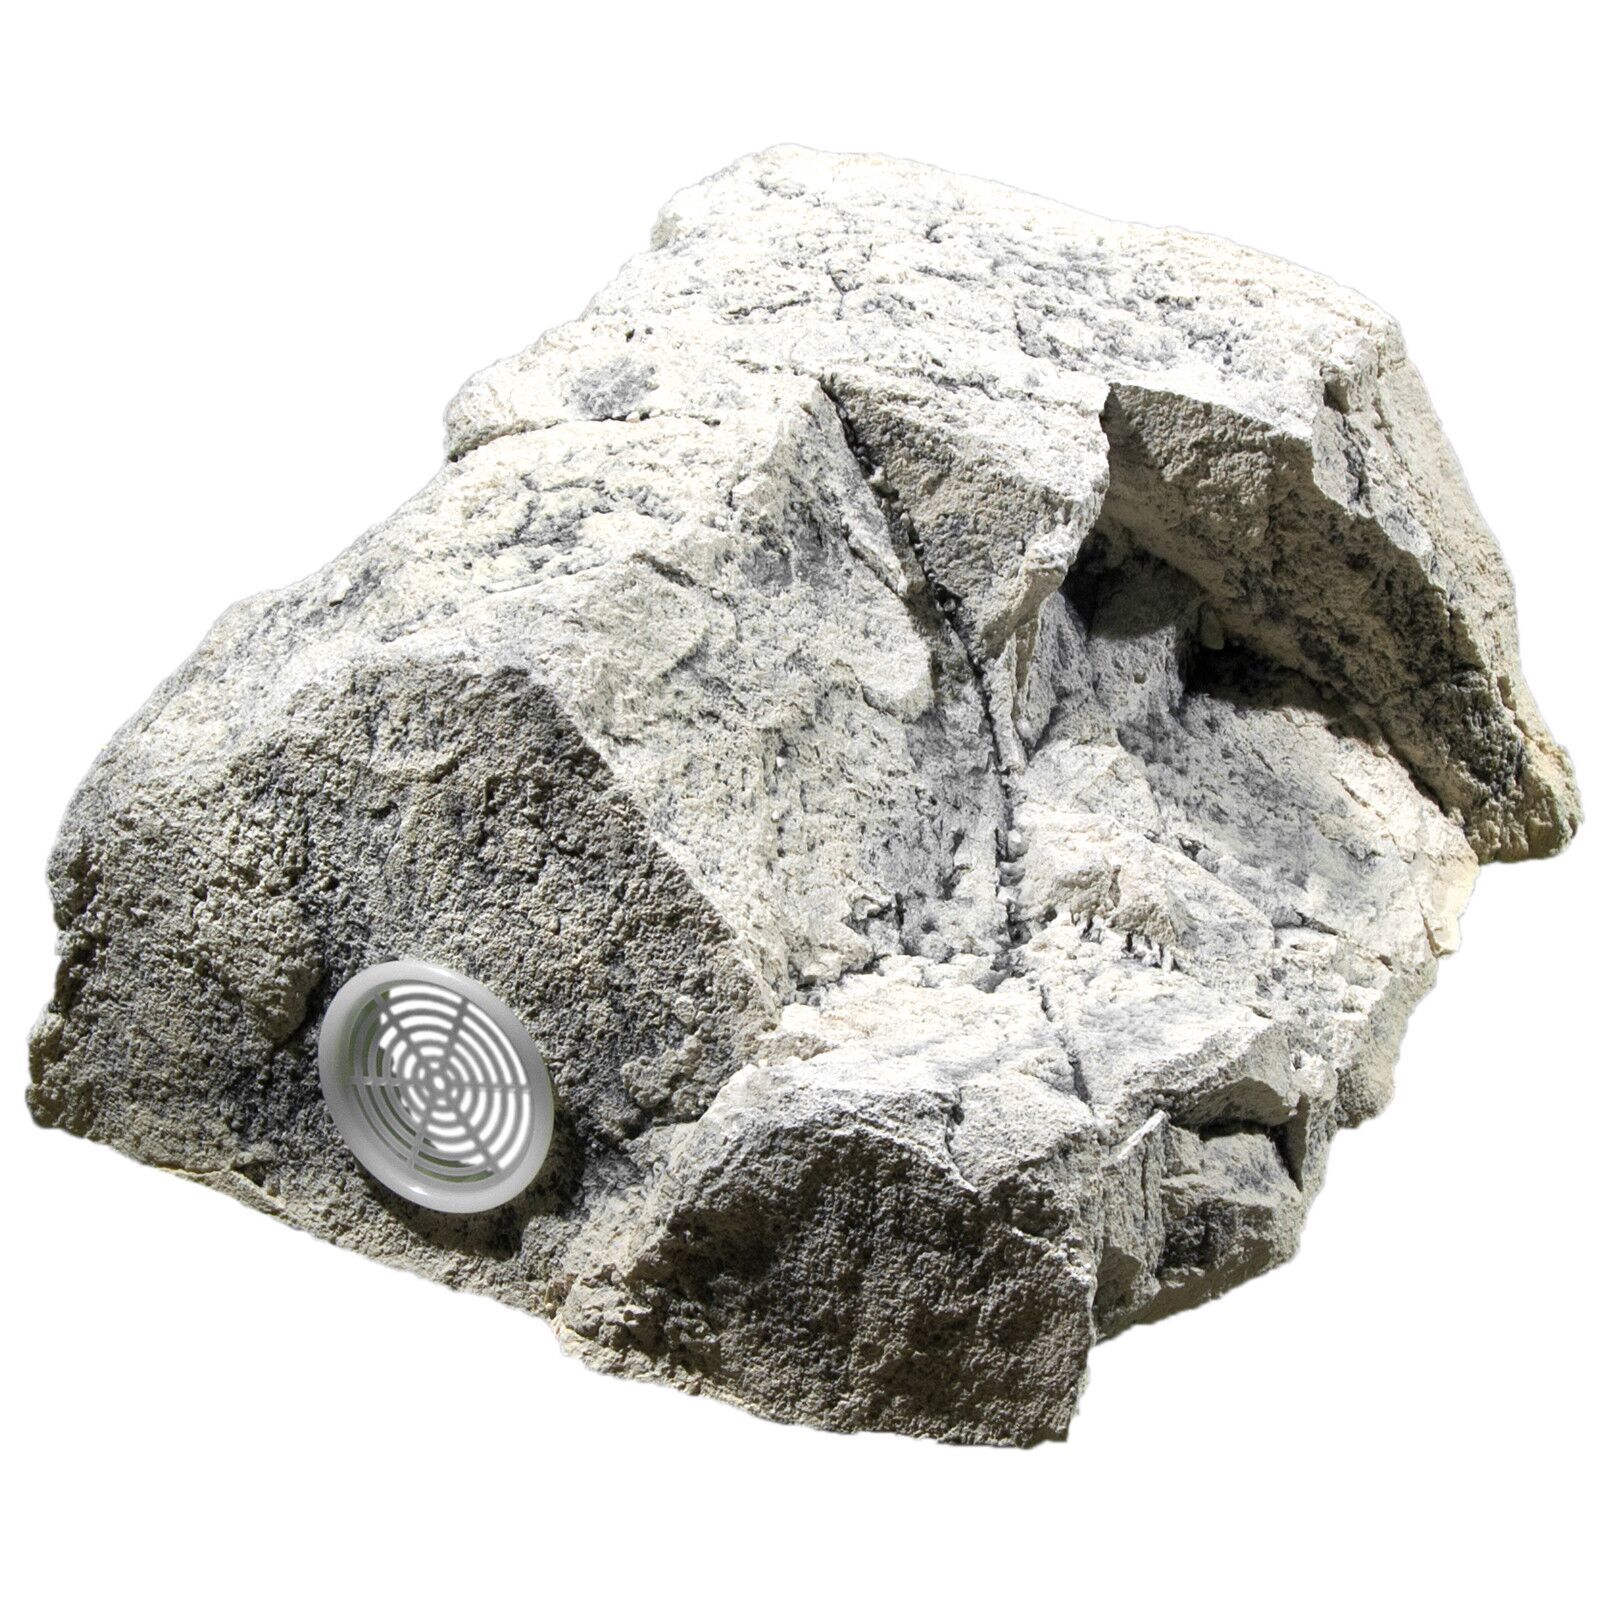 Back to Nature - Aquarium Module White Limestone